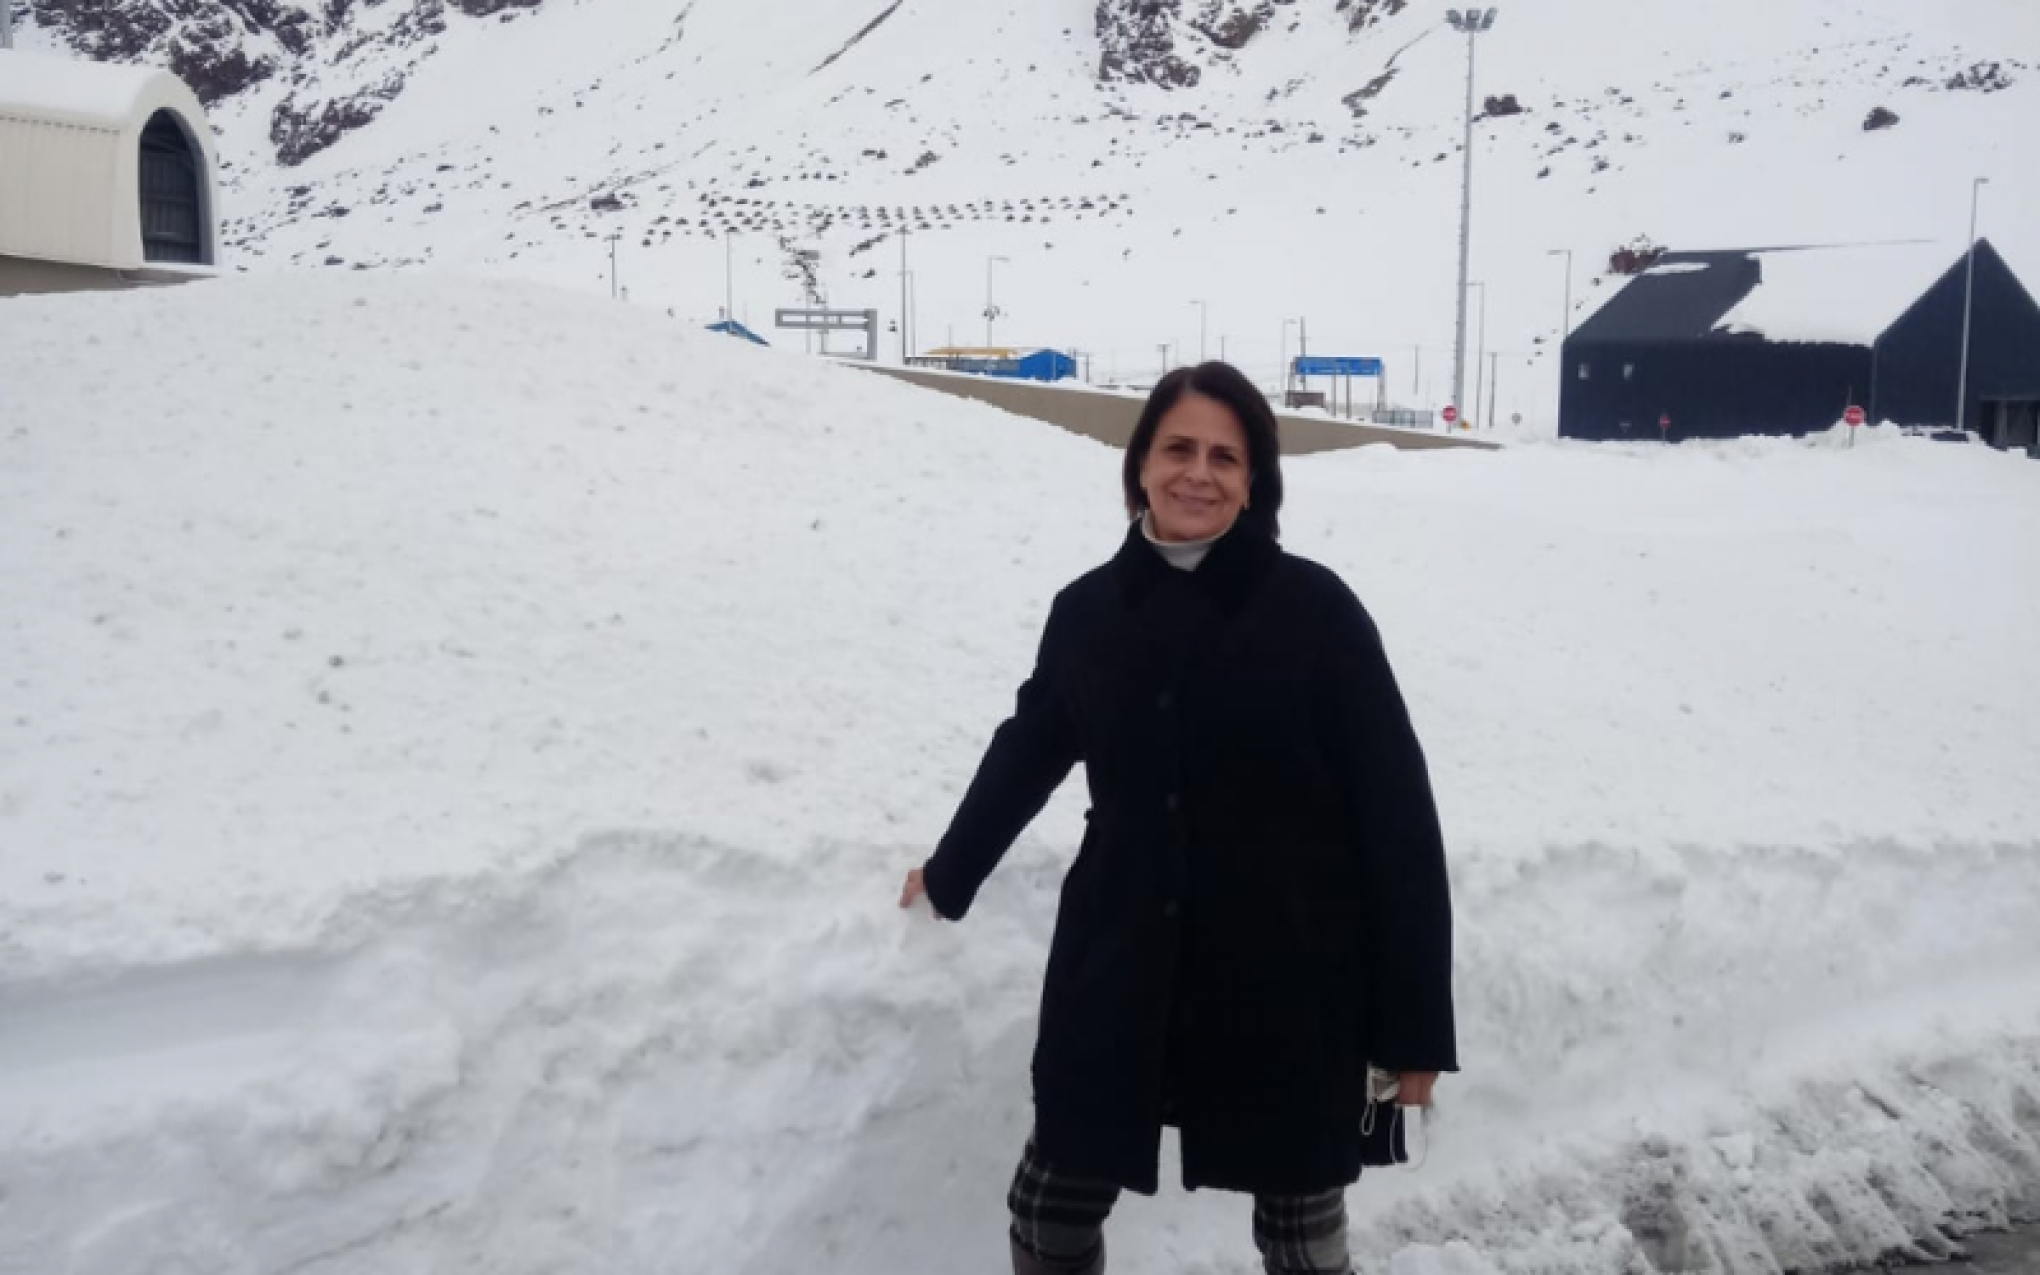 Turistas de Rio Grande do Sul regresan a Teutonia tras quedar atrapados por tormenta de nieve en Chile – Rio Grande do Sul